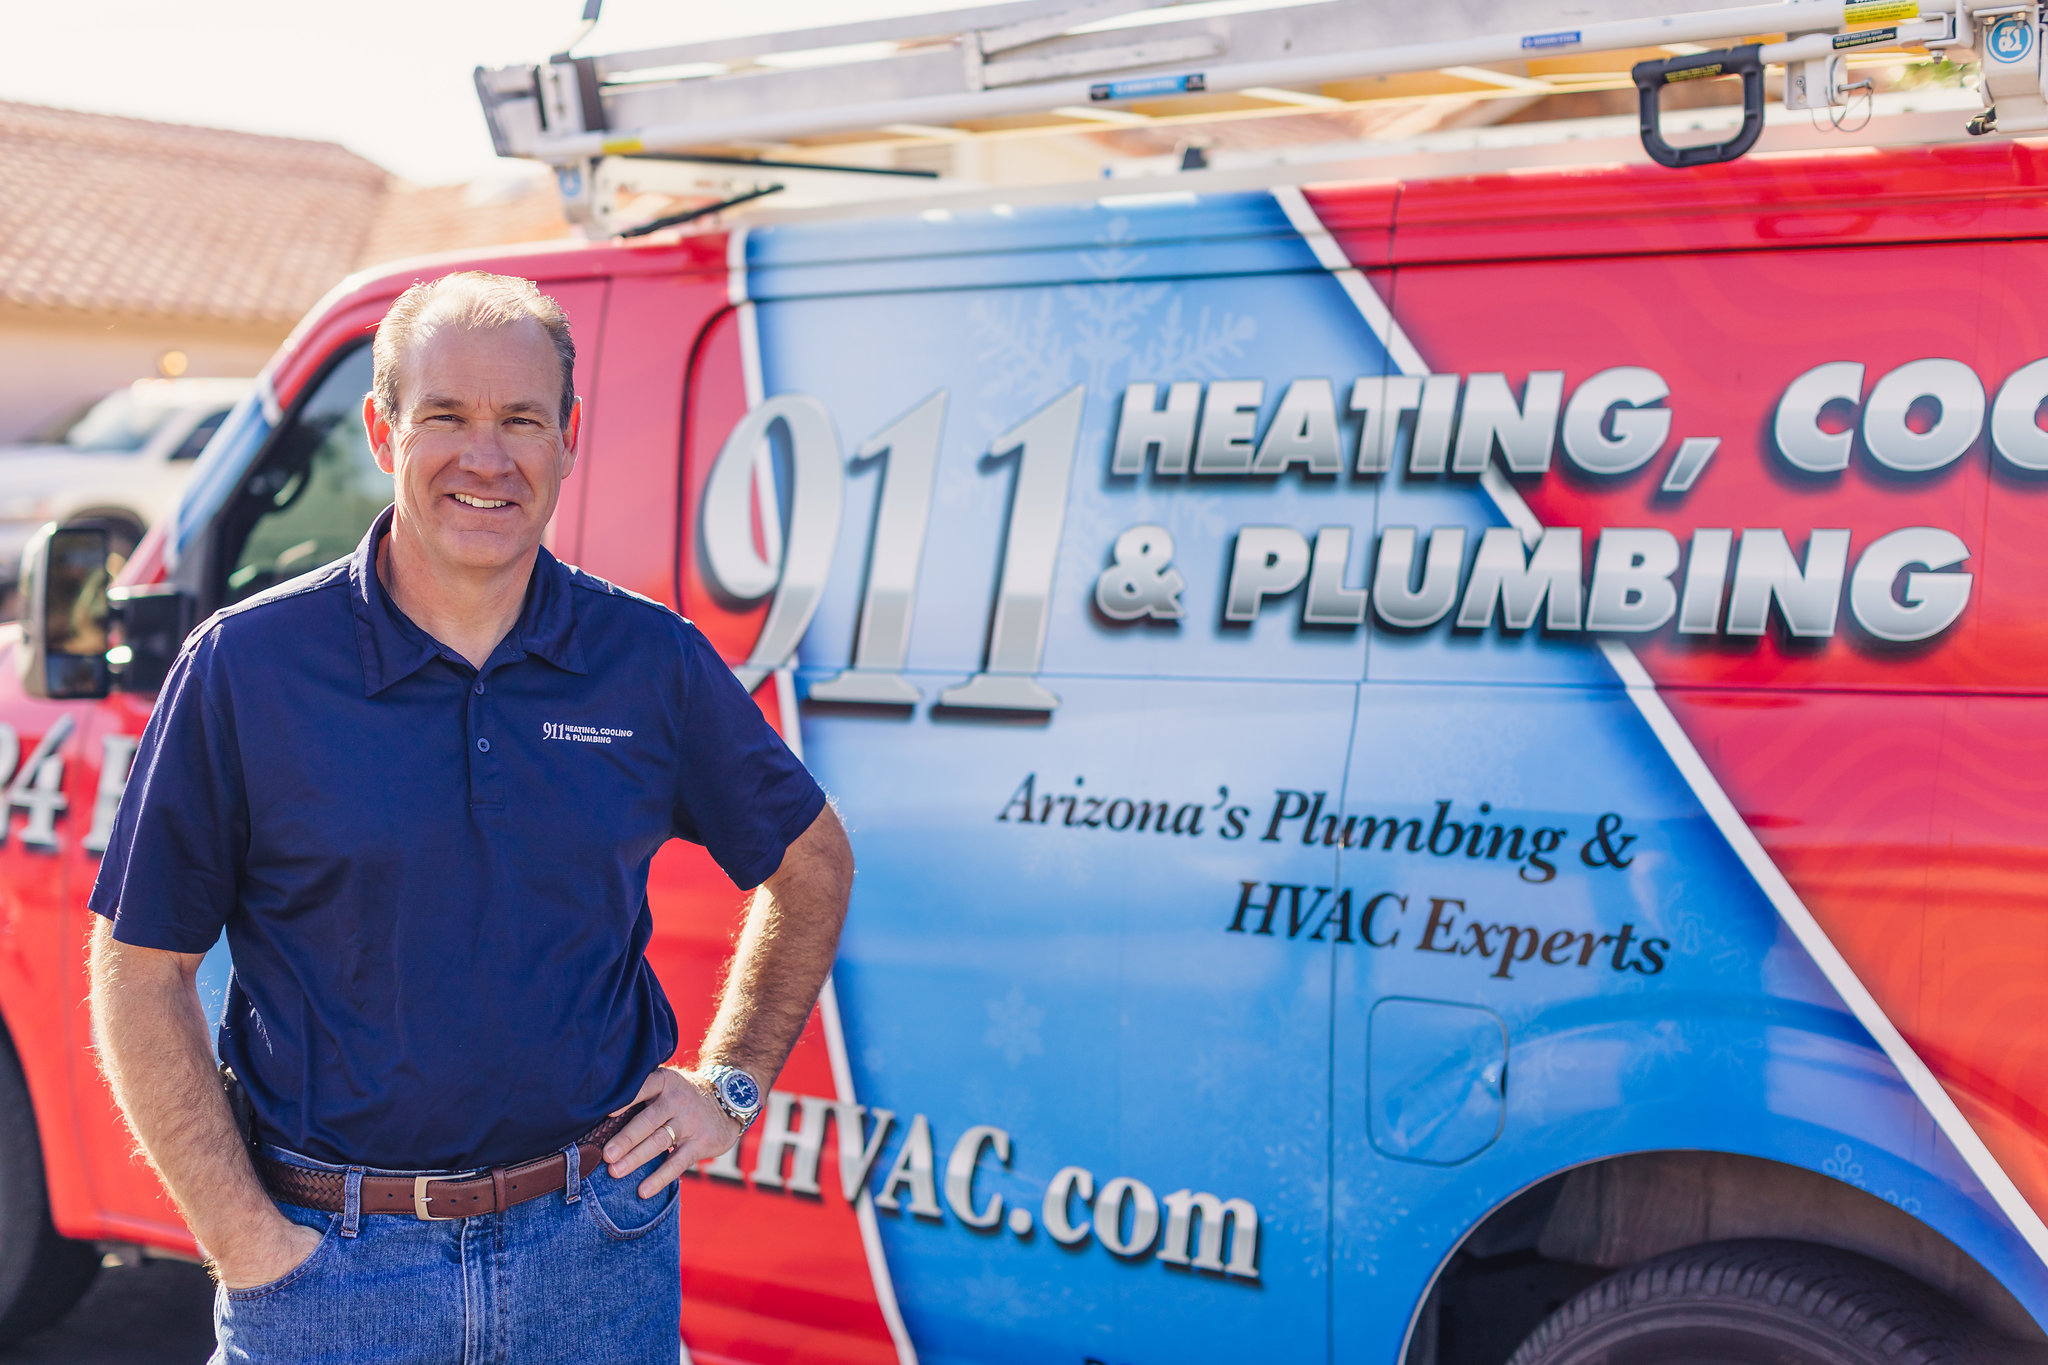 911 Heating Cooling And Plumbing Arizona S Plumbing Hvac Experts